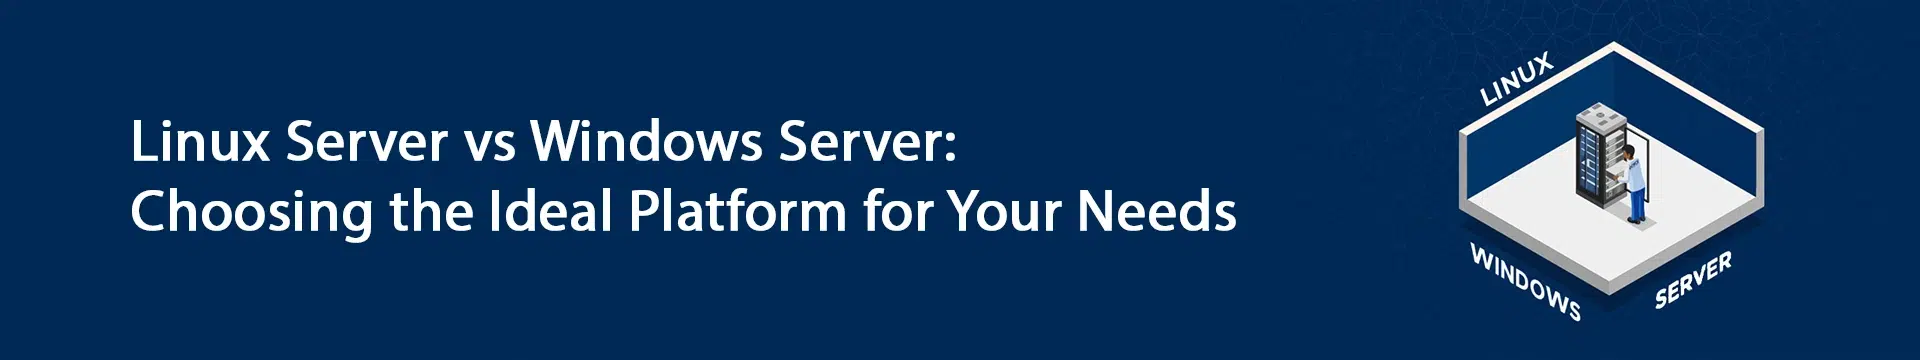 Linux Server vs Windows Server: Choosing the Ideal Platform for Your Needs